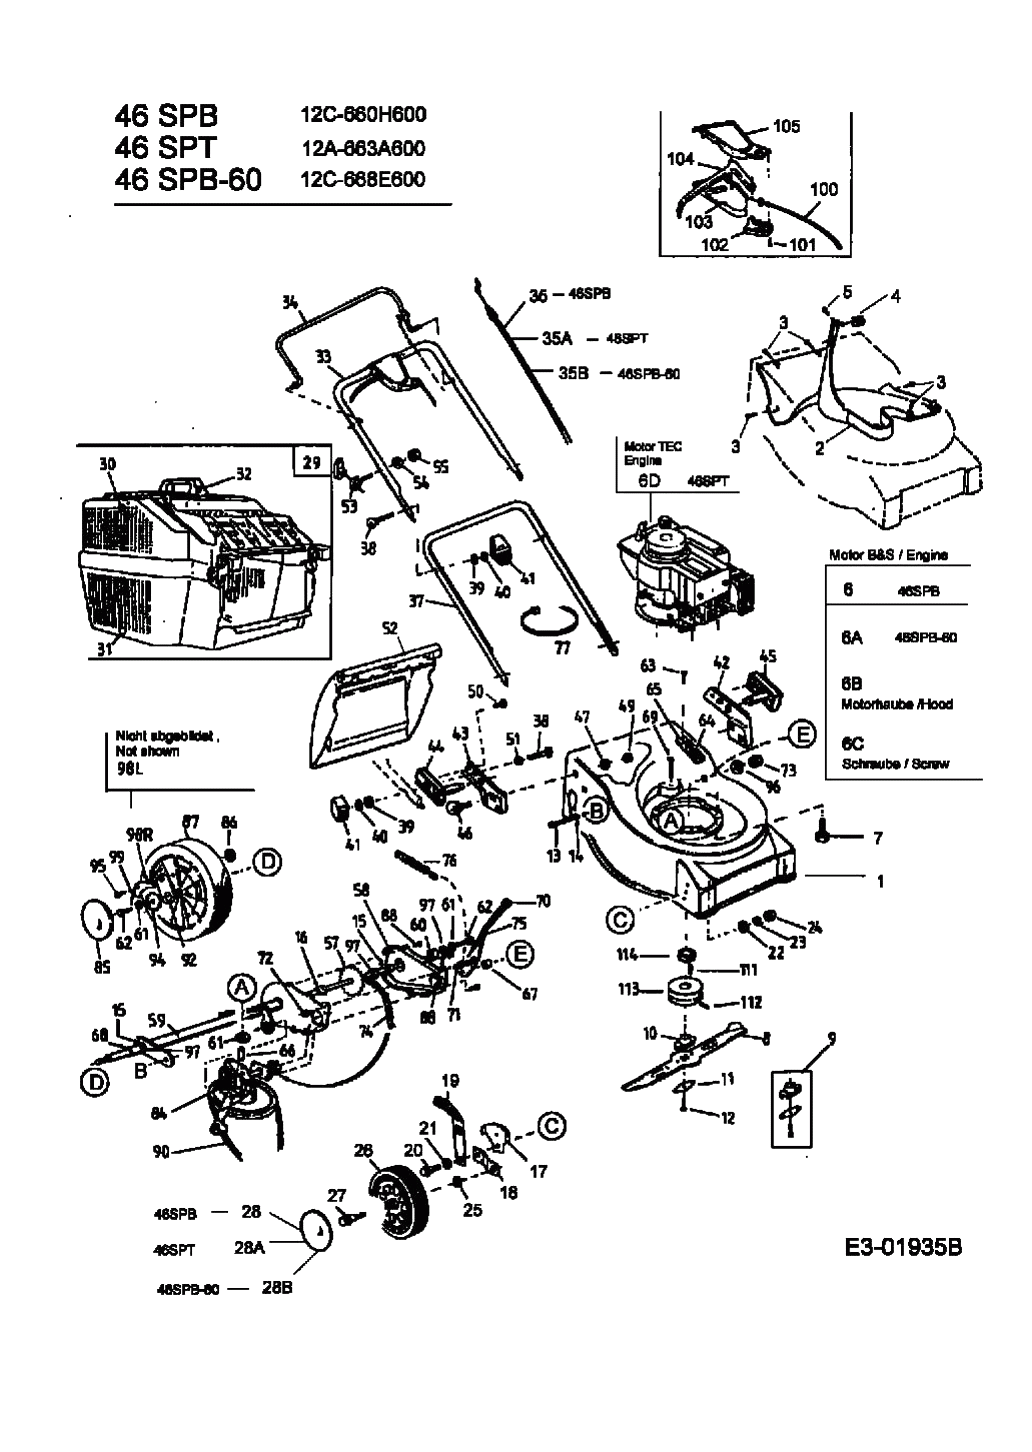 MTD Артикул 12C-660H600 (год выпуска 2005). Основная деталировка